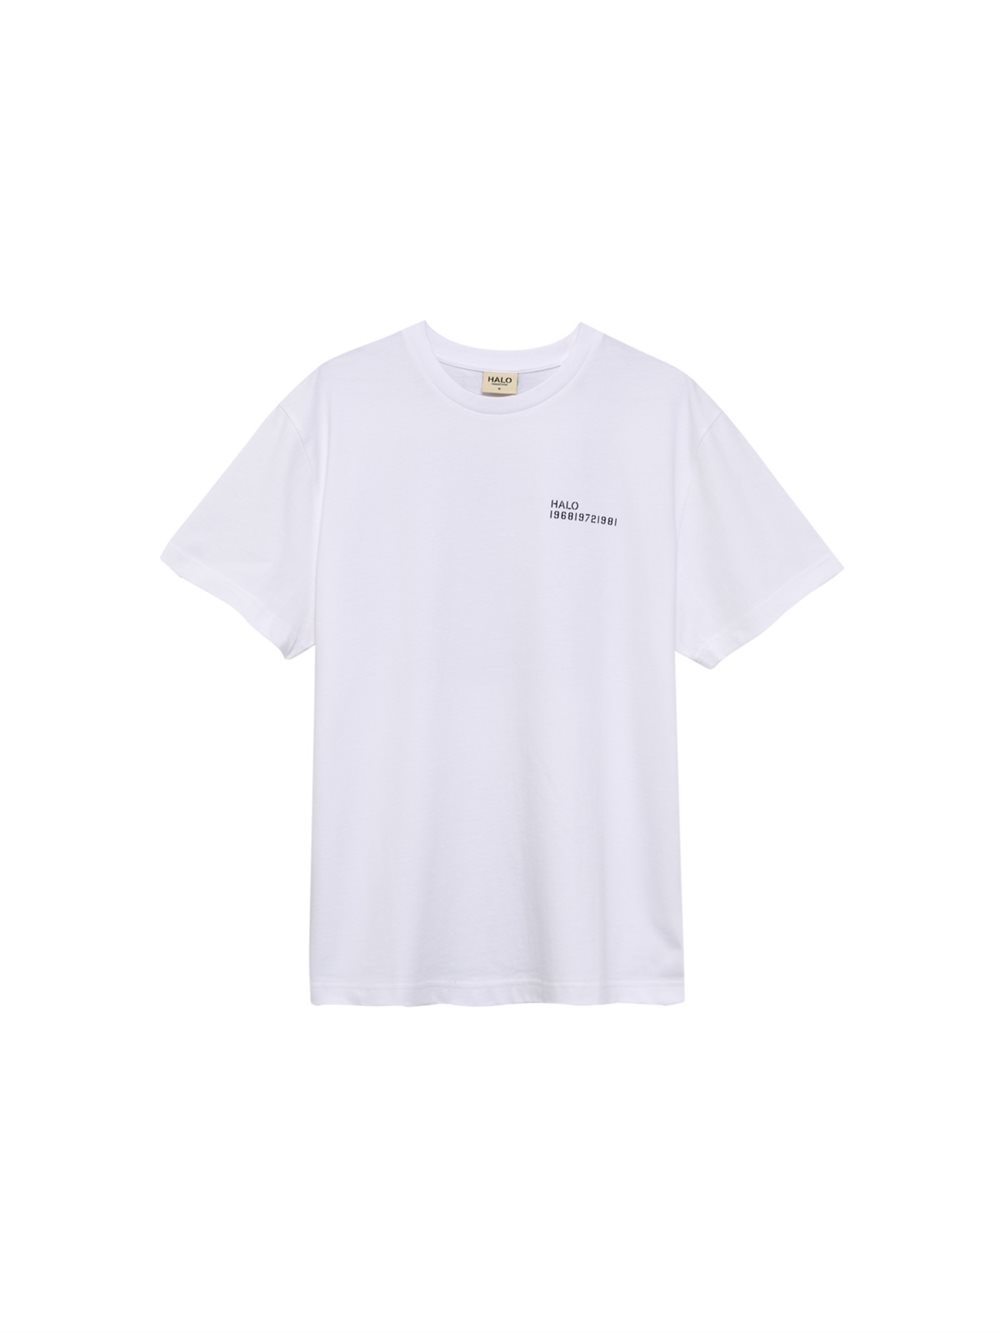 T-Shirt White/Silver Lining Unisex